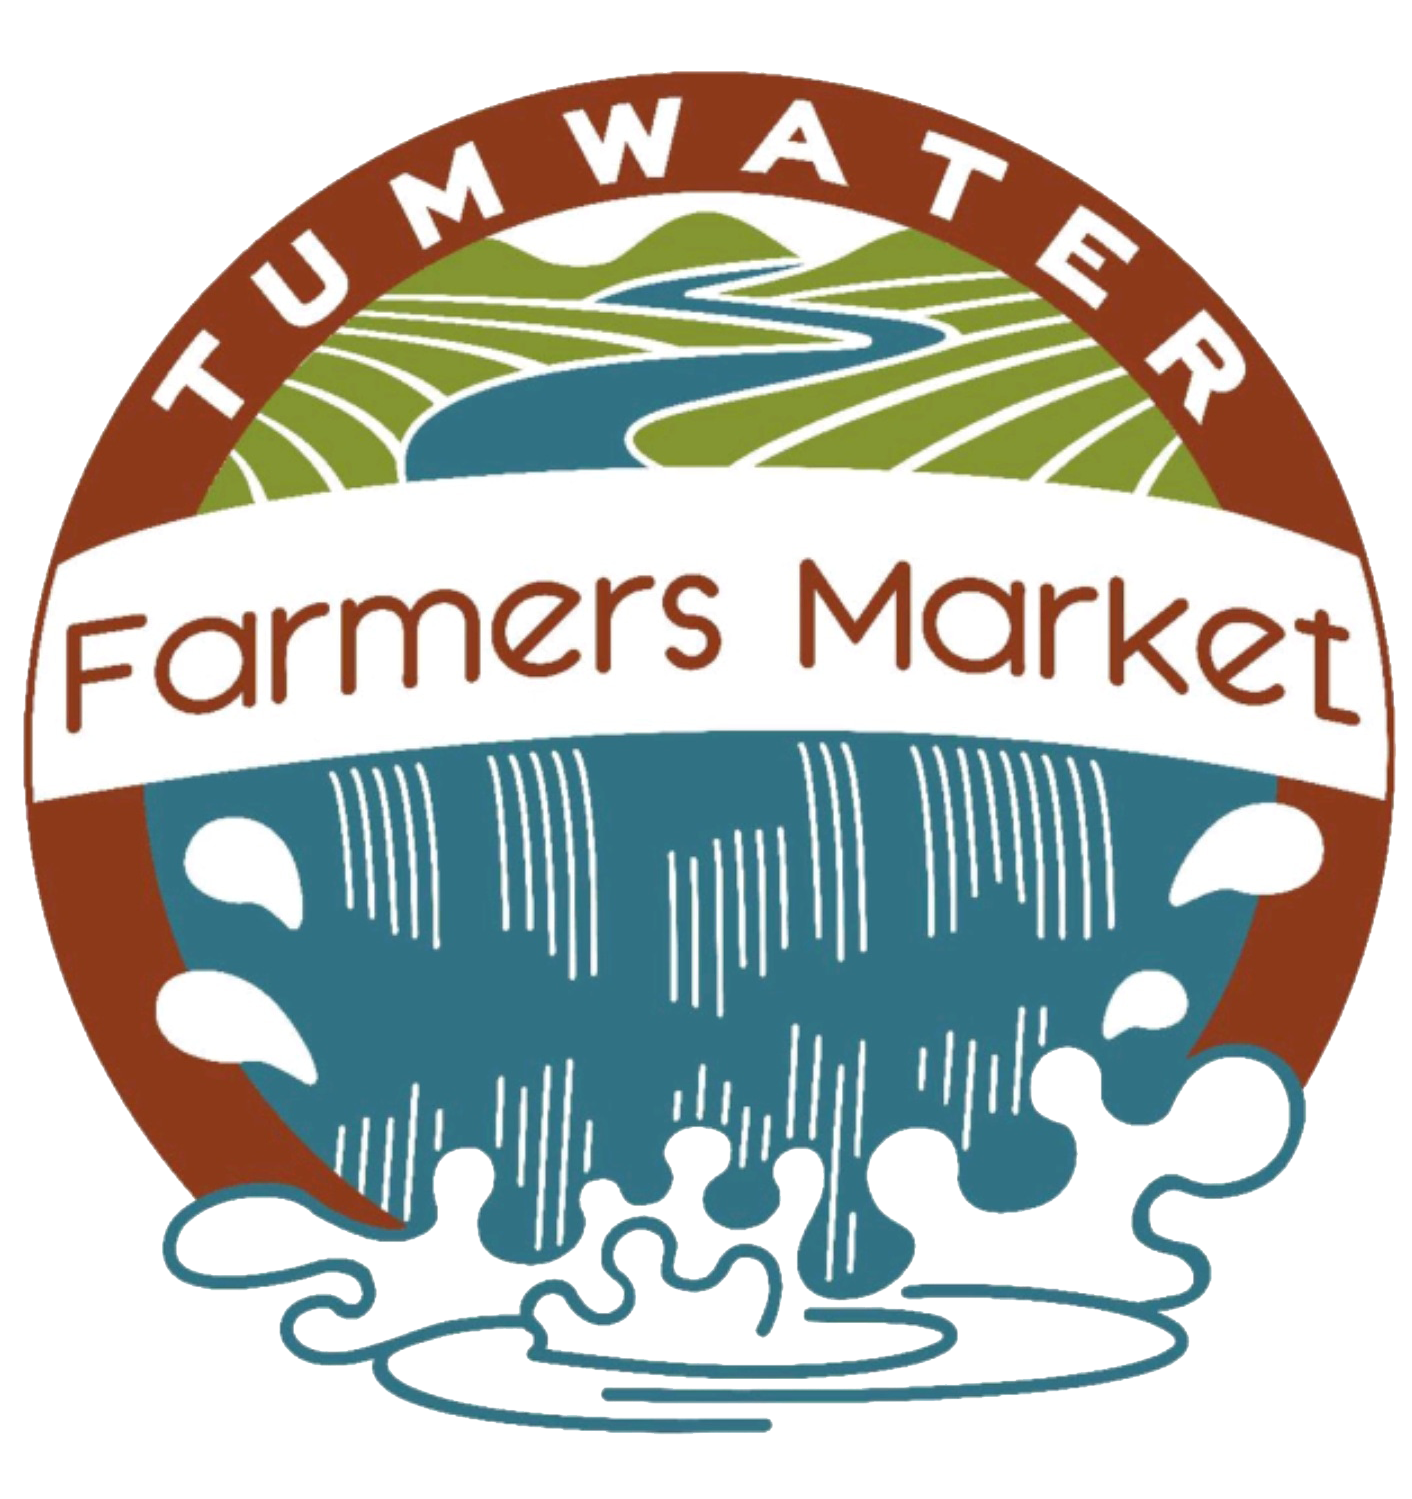 Tumwater Farmers Market - Farmers Market in Tumwater, Washington